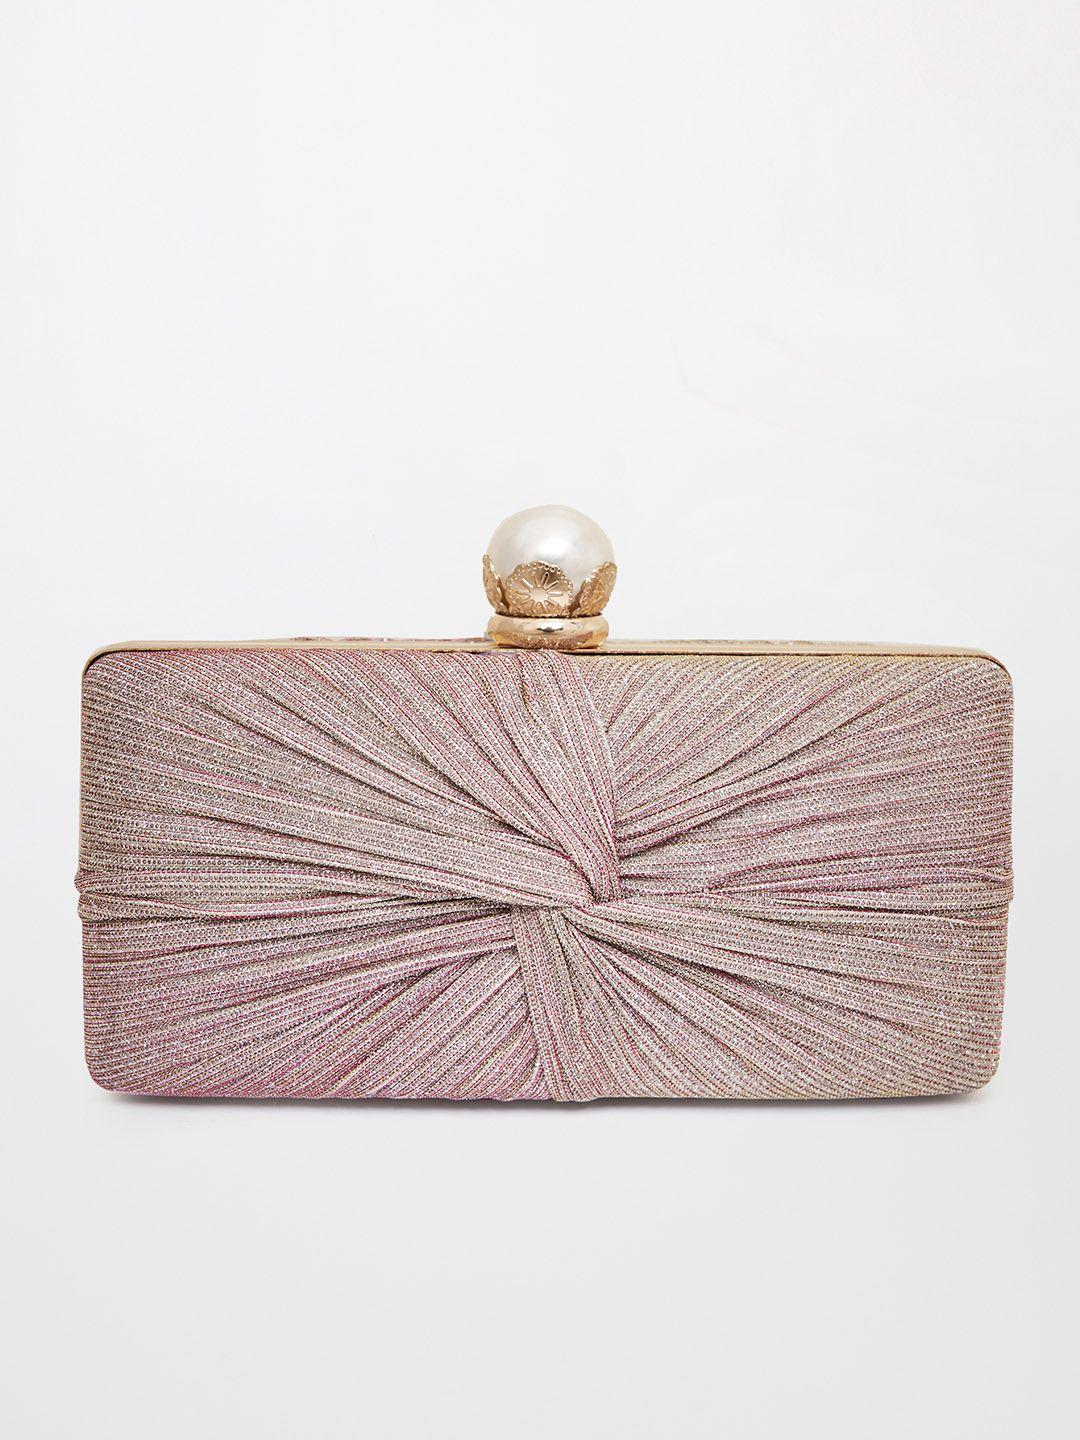 global desi rose gold-toned textured box clutch